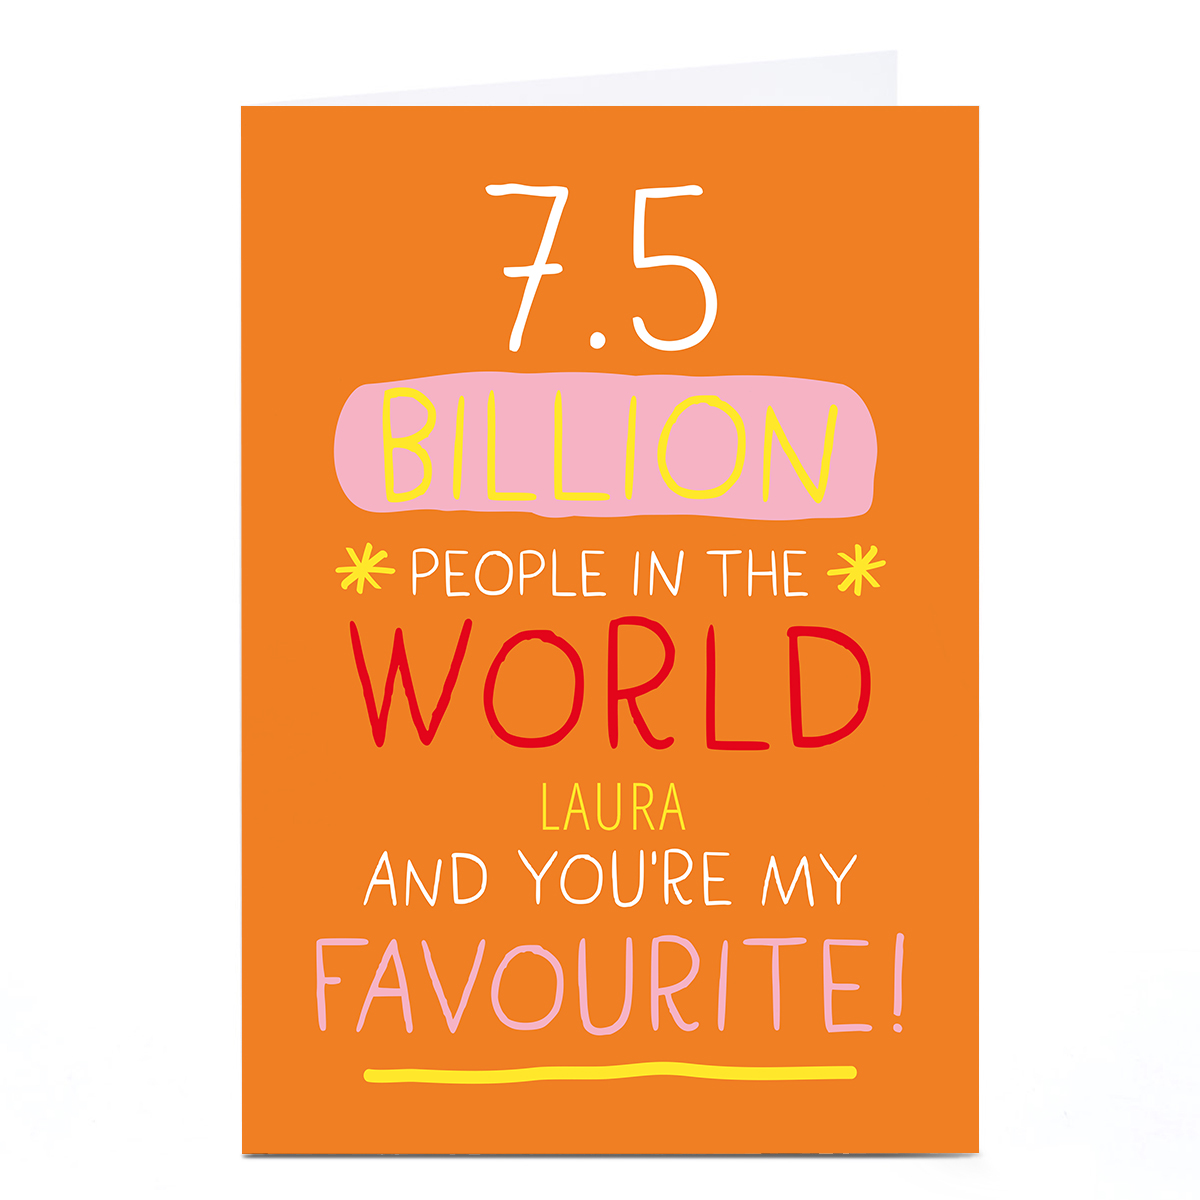 Personalised Smiley Happy People Card - 7.5 Billion People